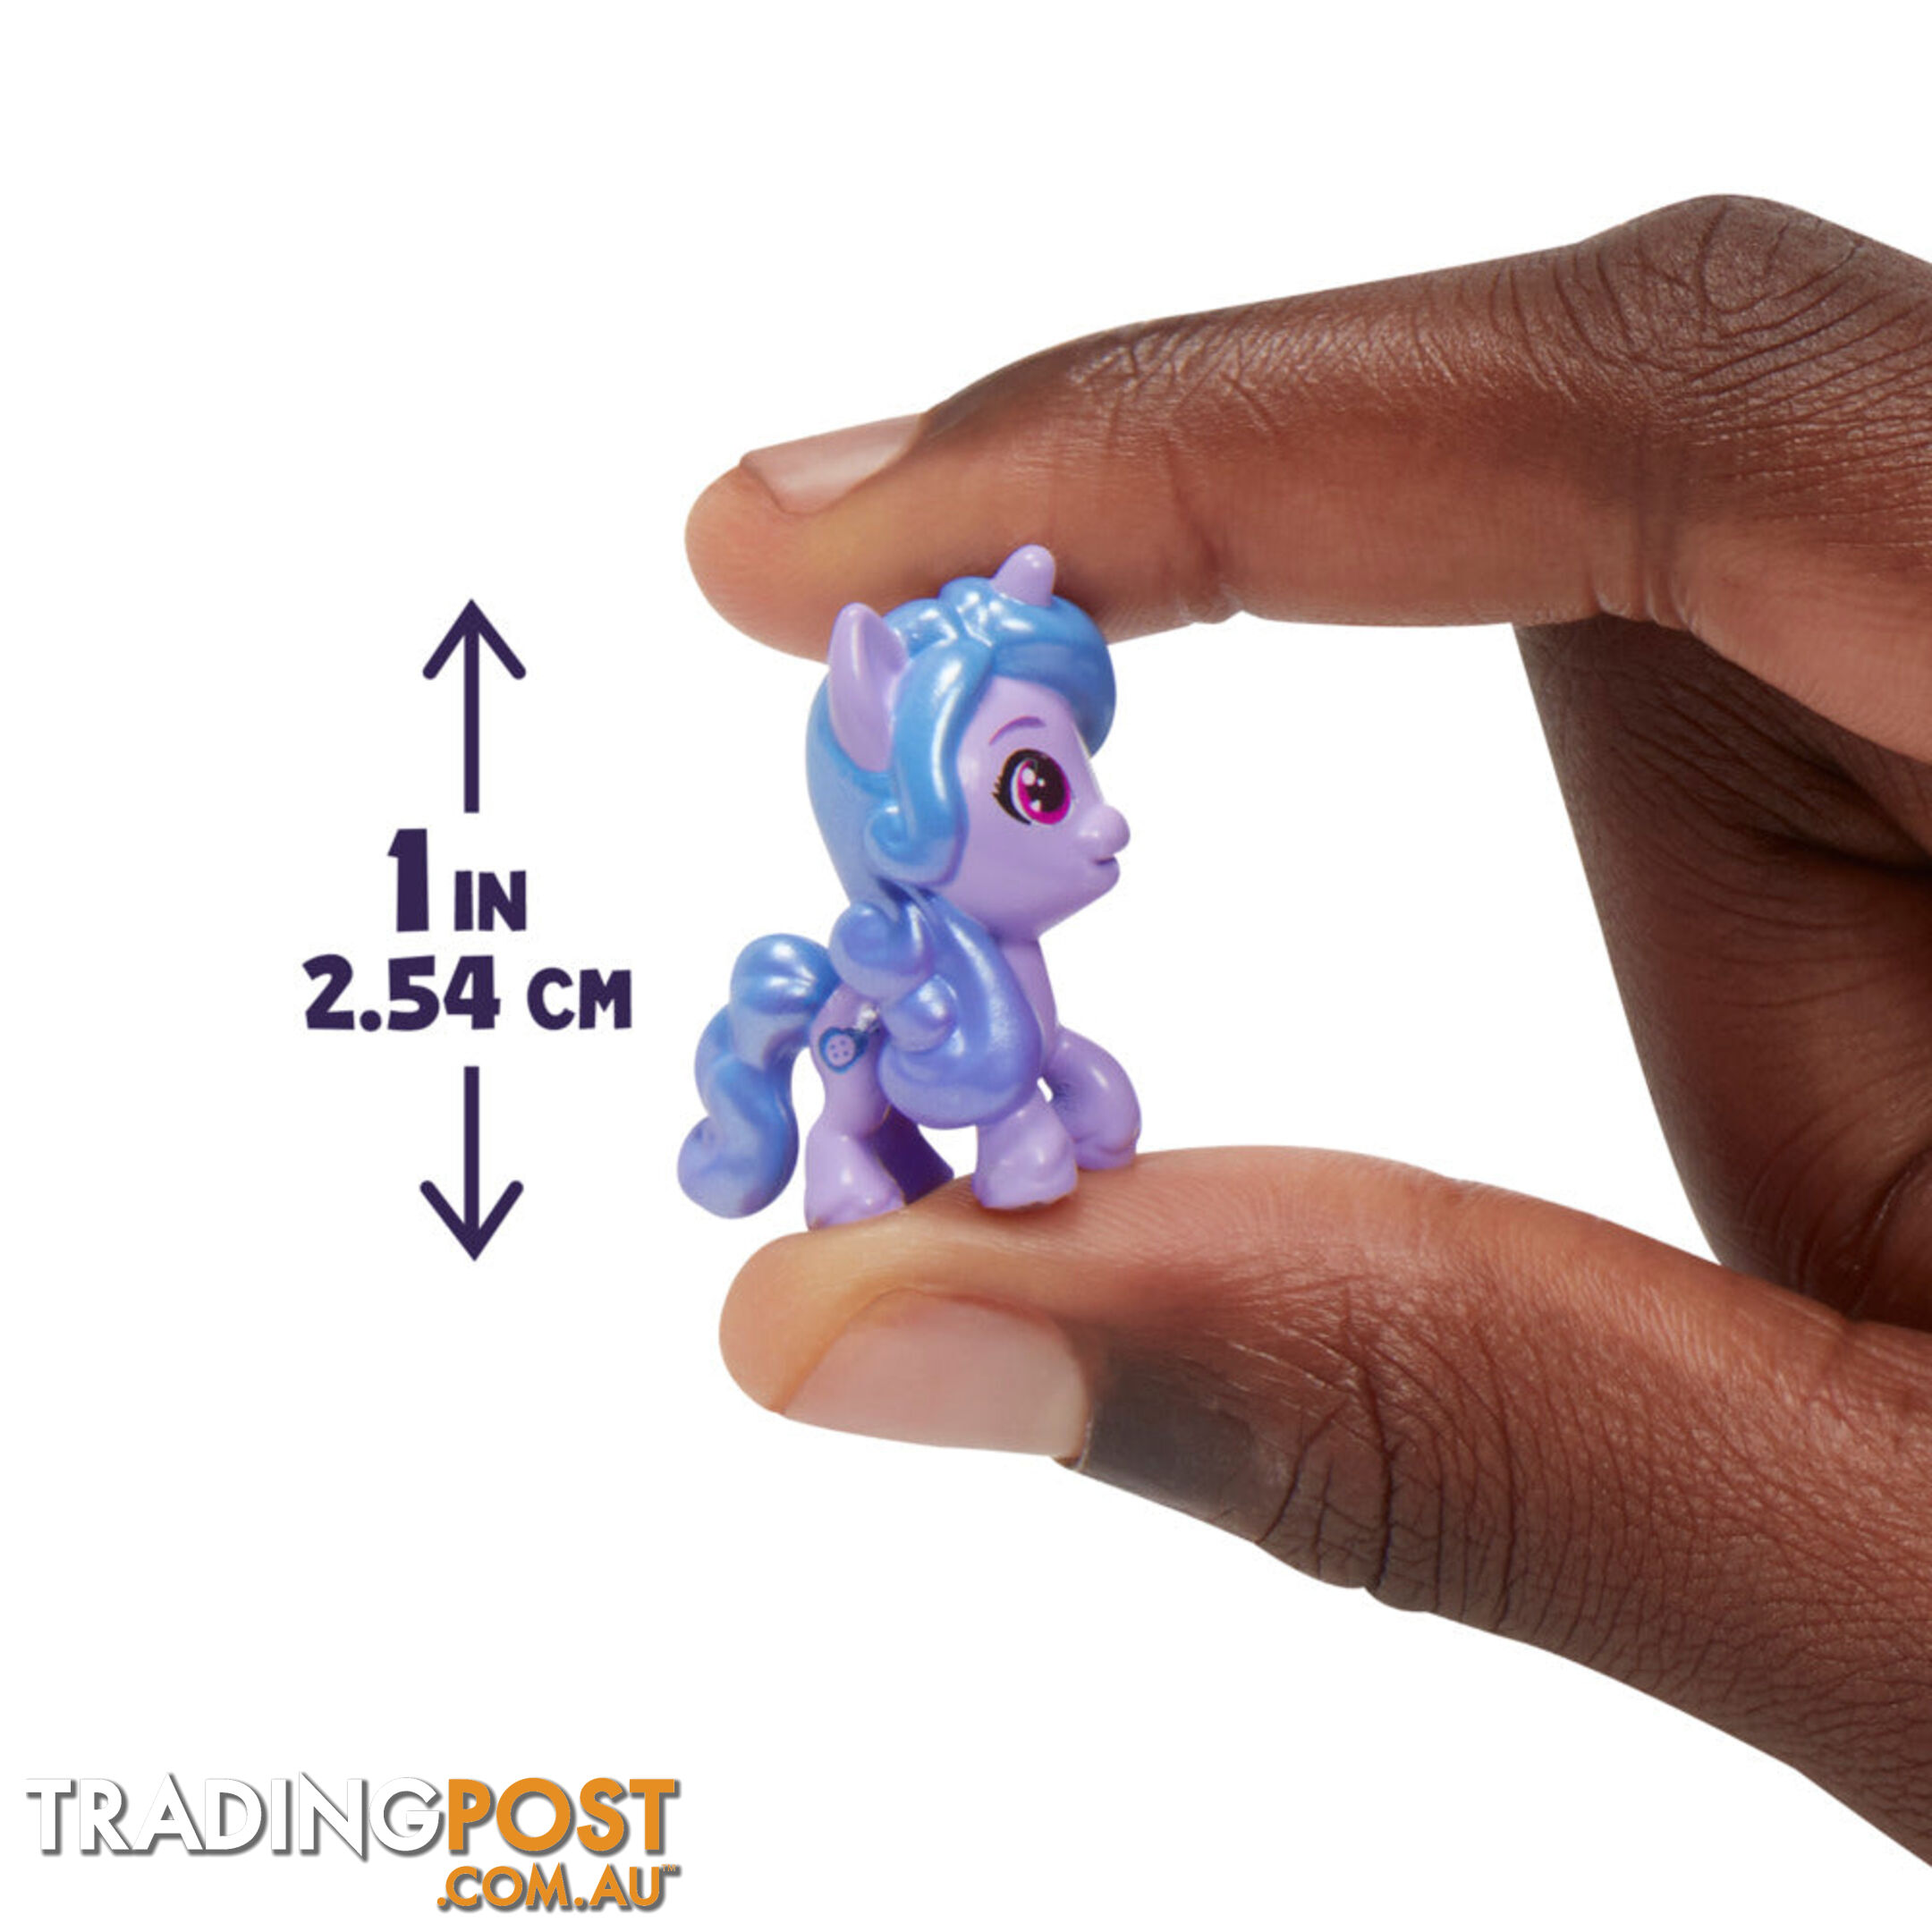 My Little Pony - Mini World Magic Crystal Keychain Izzy Moonbow - Hasbro - Hbf38725loo - 5010994109806